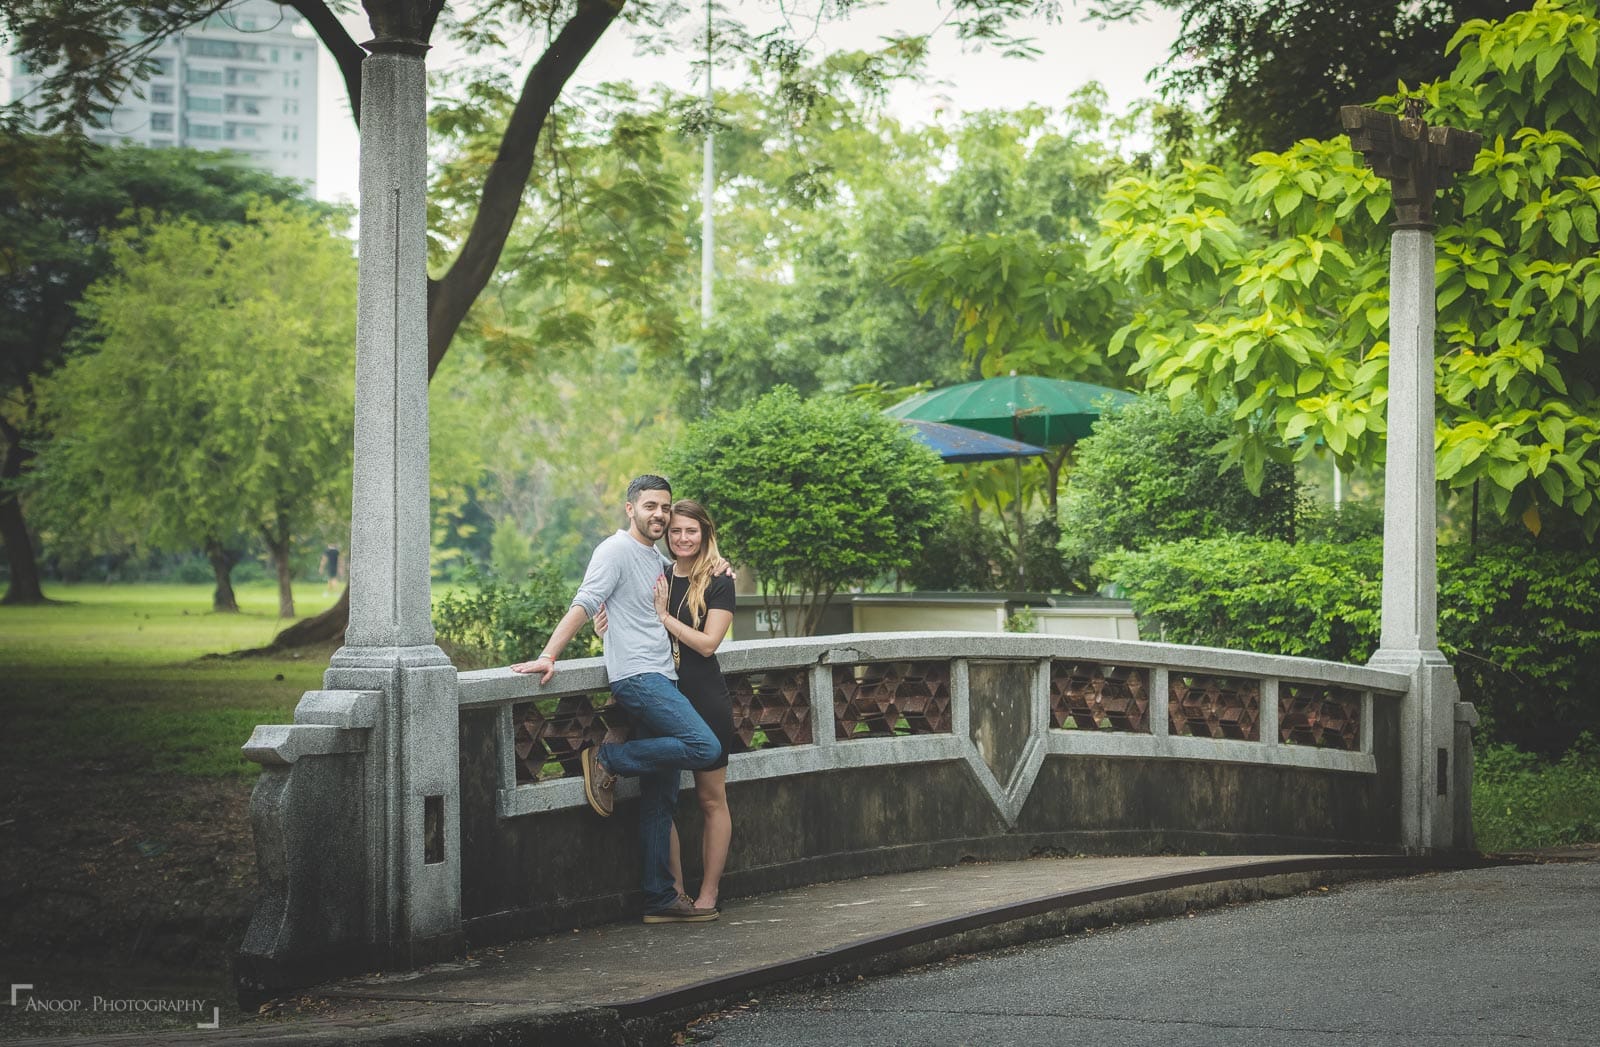 surprise-proposal-photography-thailand-marriage-proposal-ideas-photos23